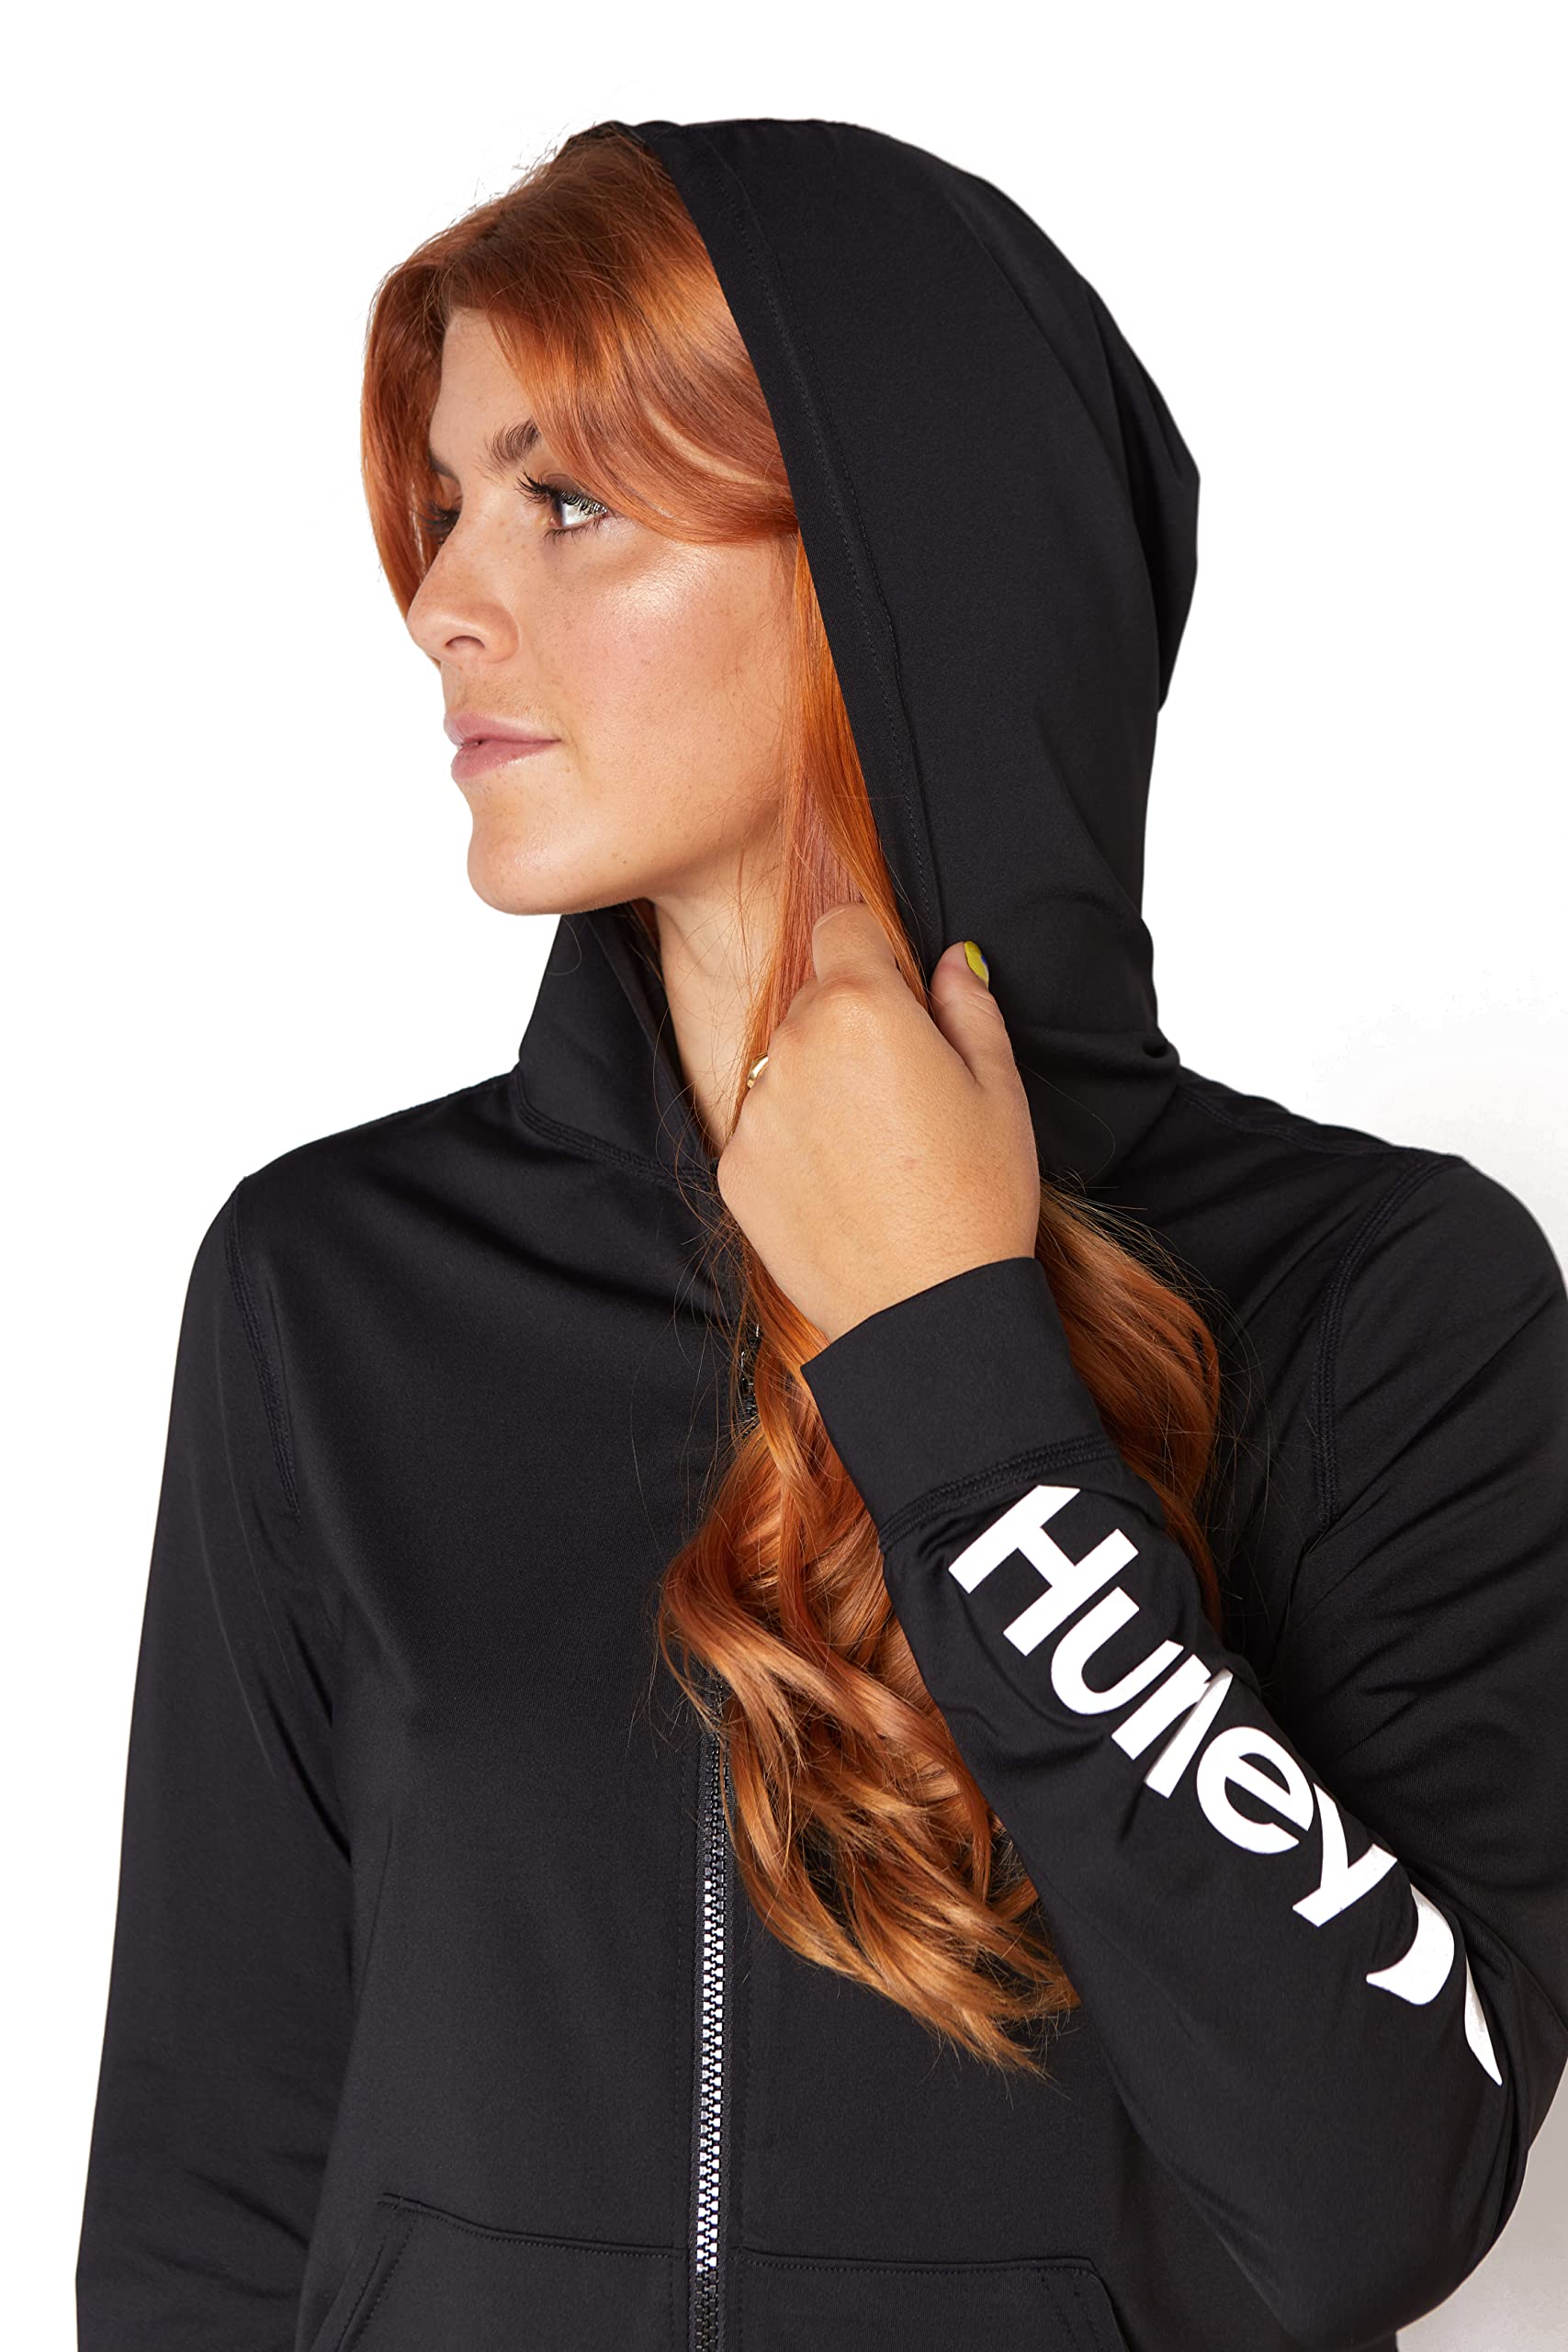 Hurley Women's Standard Hoodie Zip Rashguard